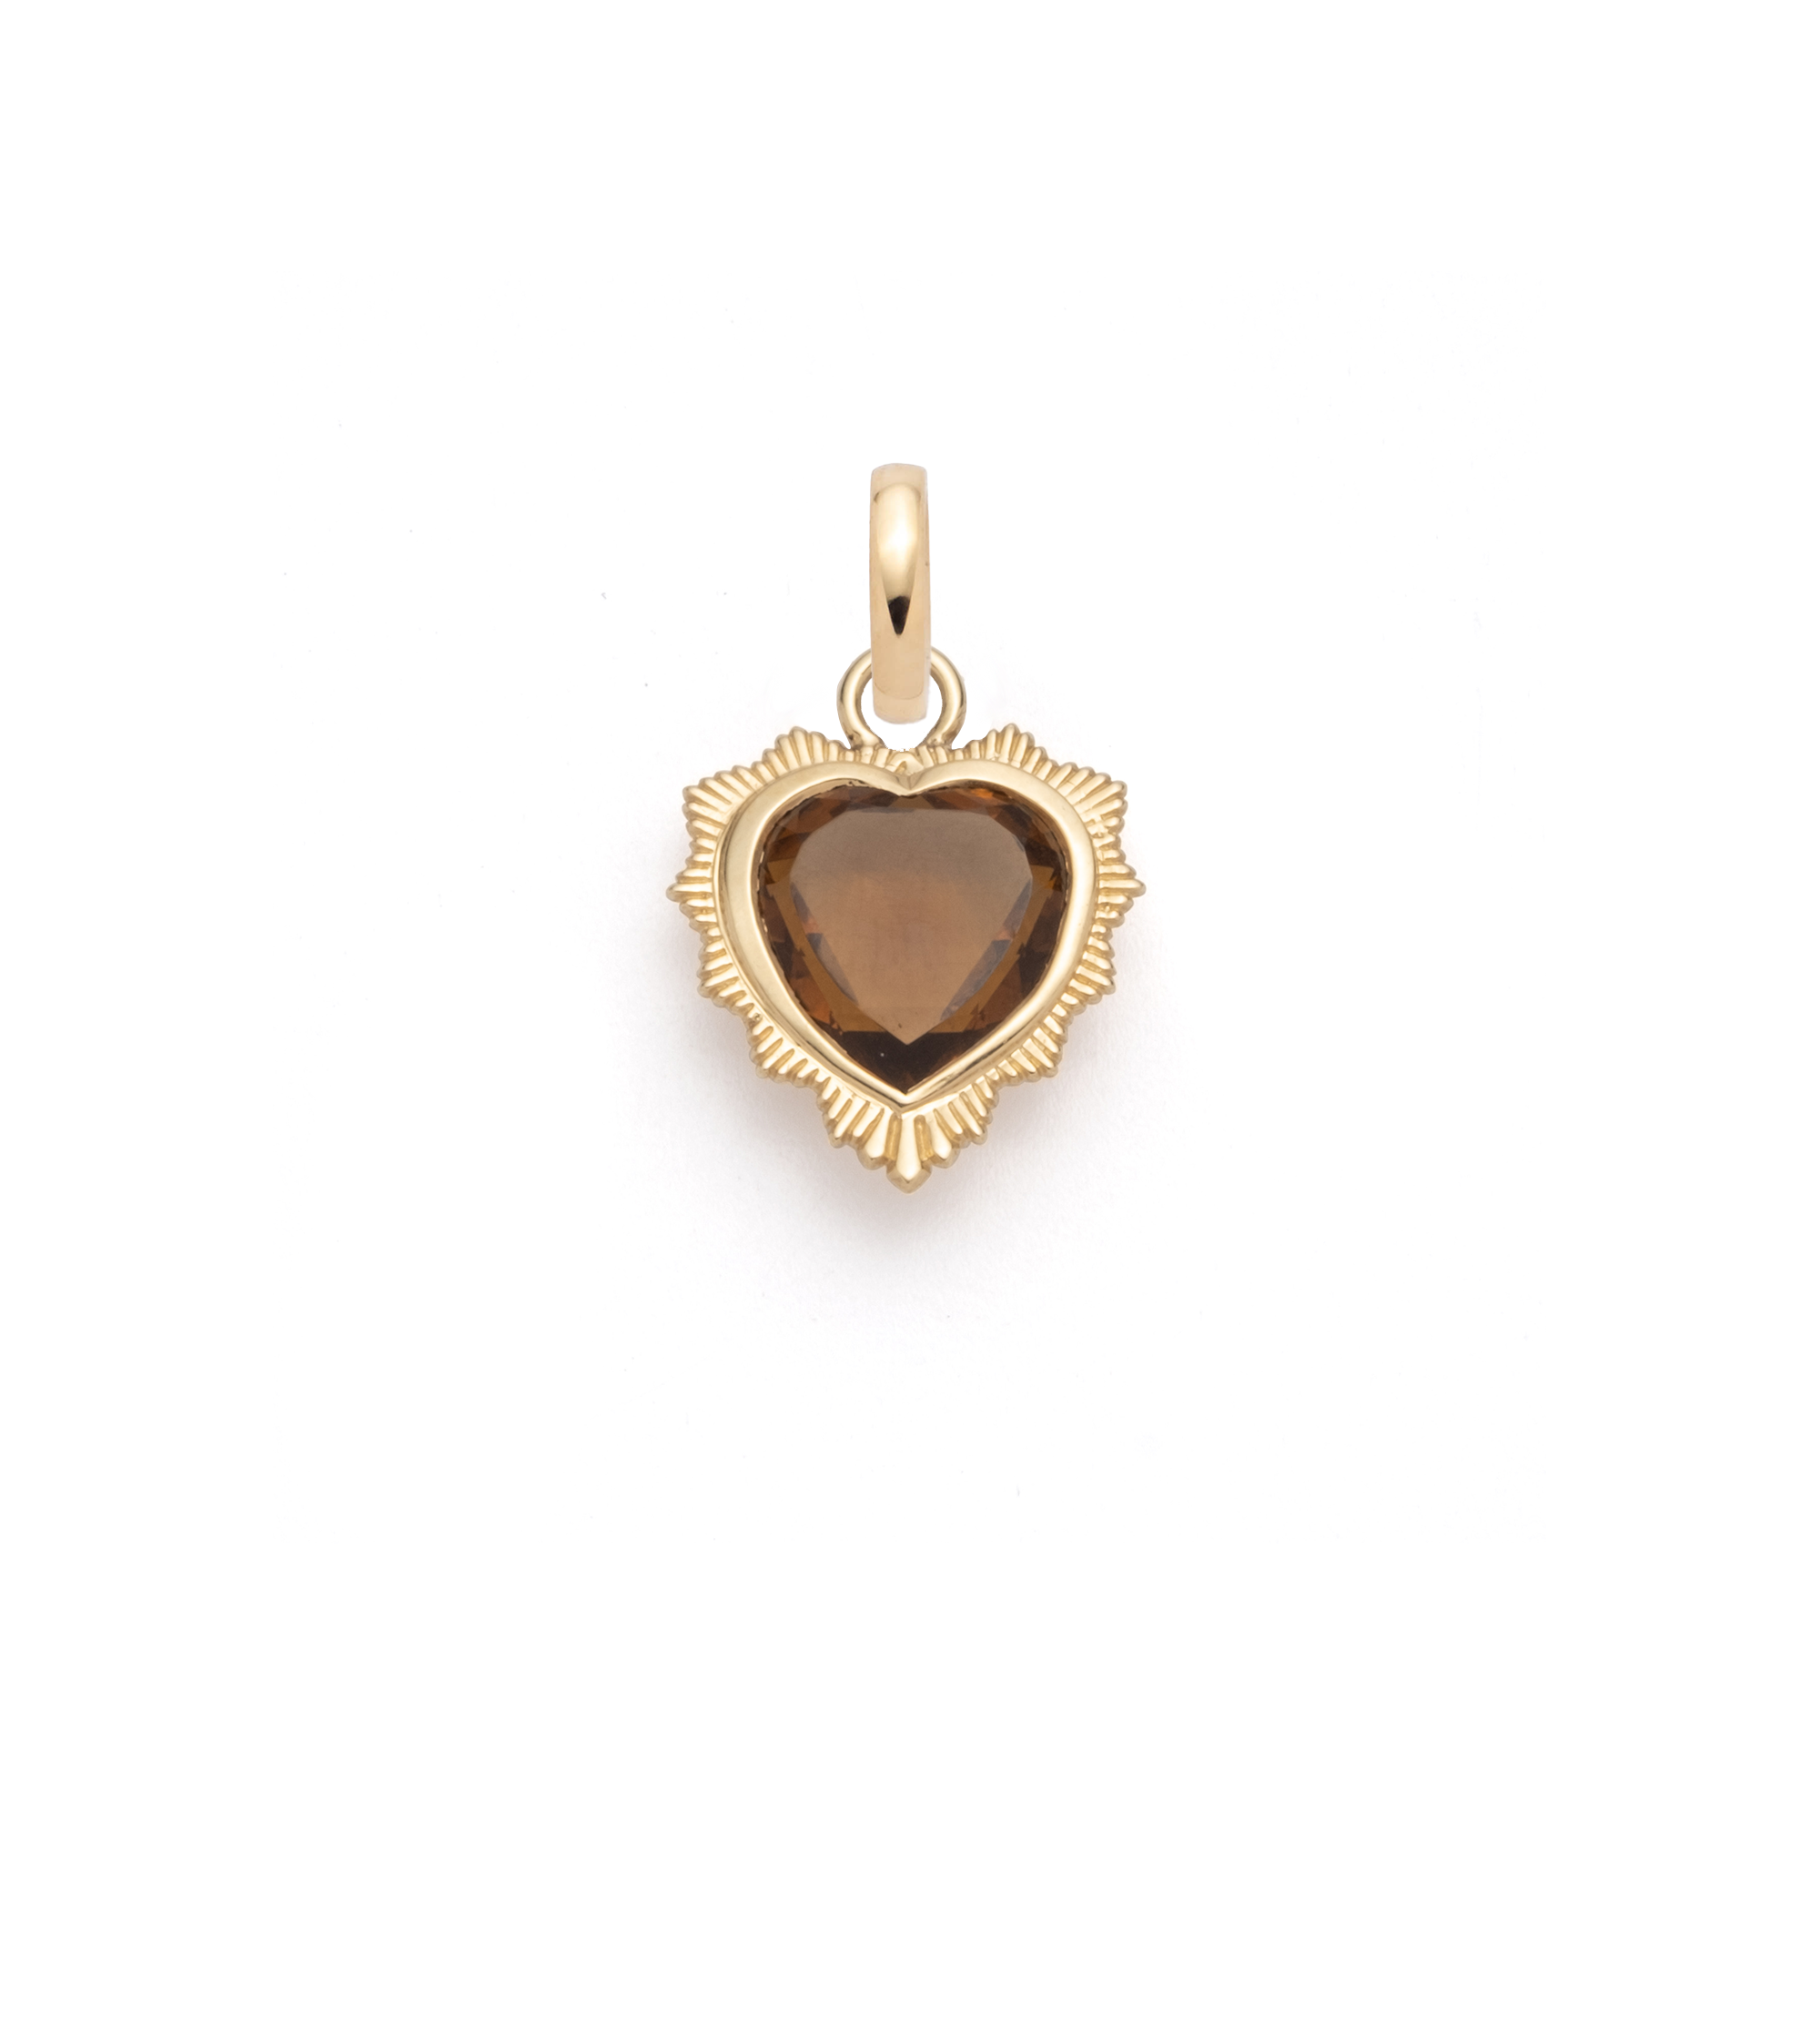 Gemstone Heart - Love : Champagne Citrine Medallion with Oval Pushgate